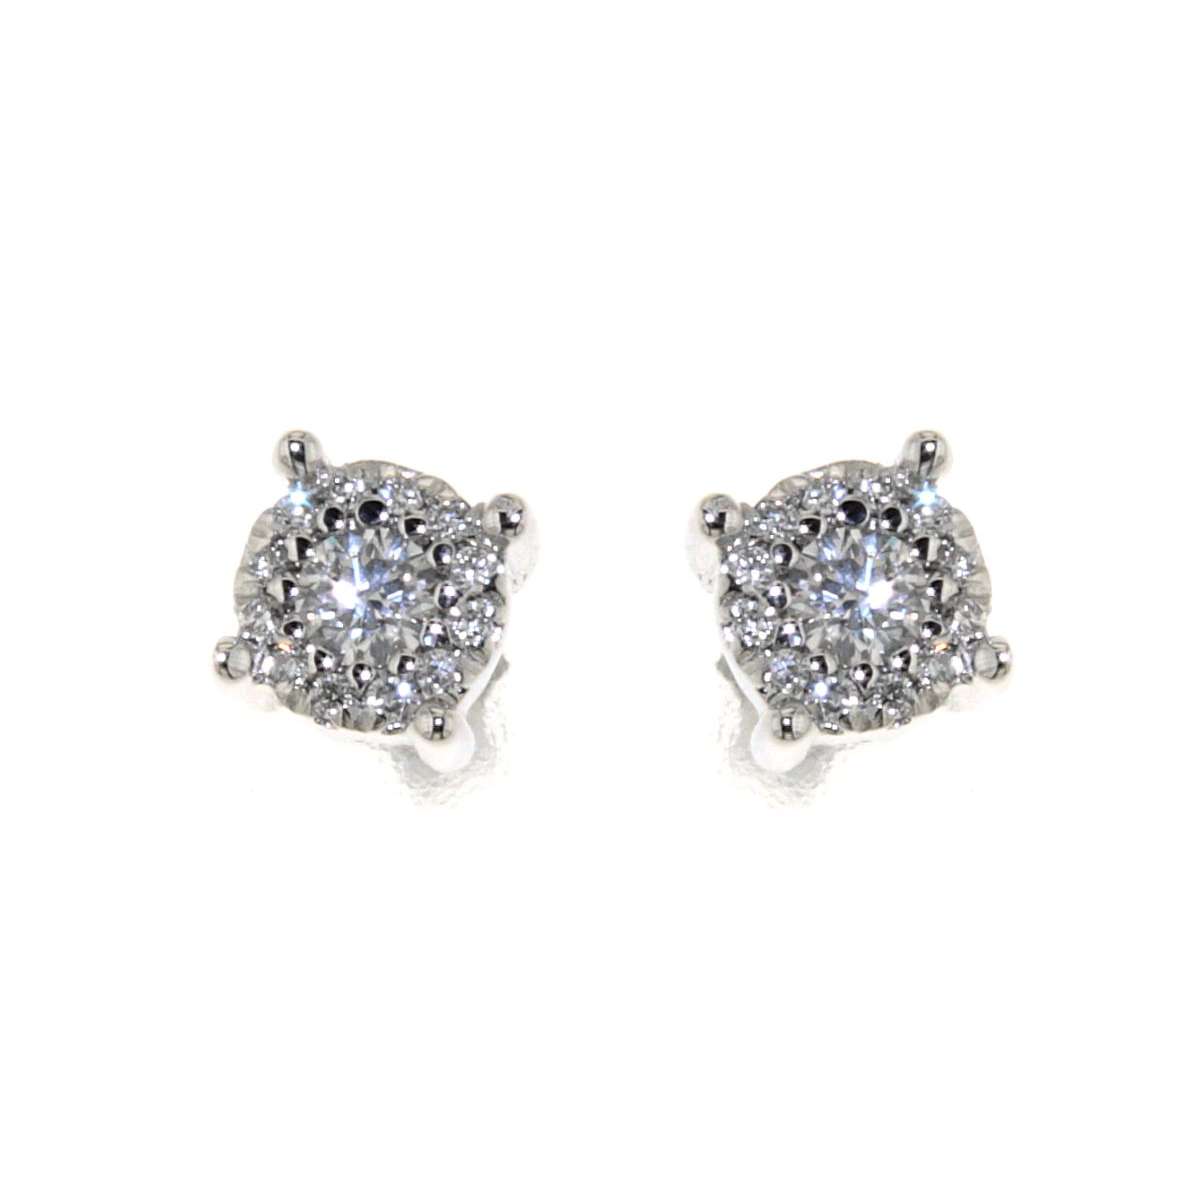 Solitaire earrings 0.32 carats diamonds G-VS1